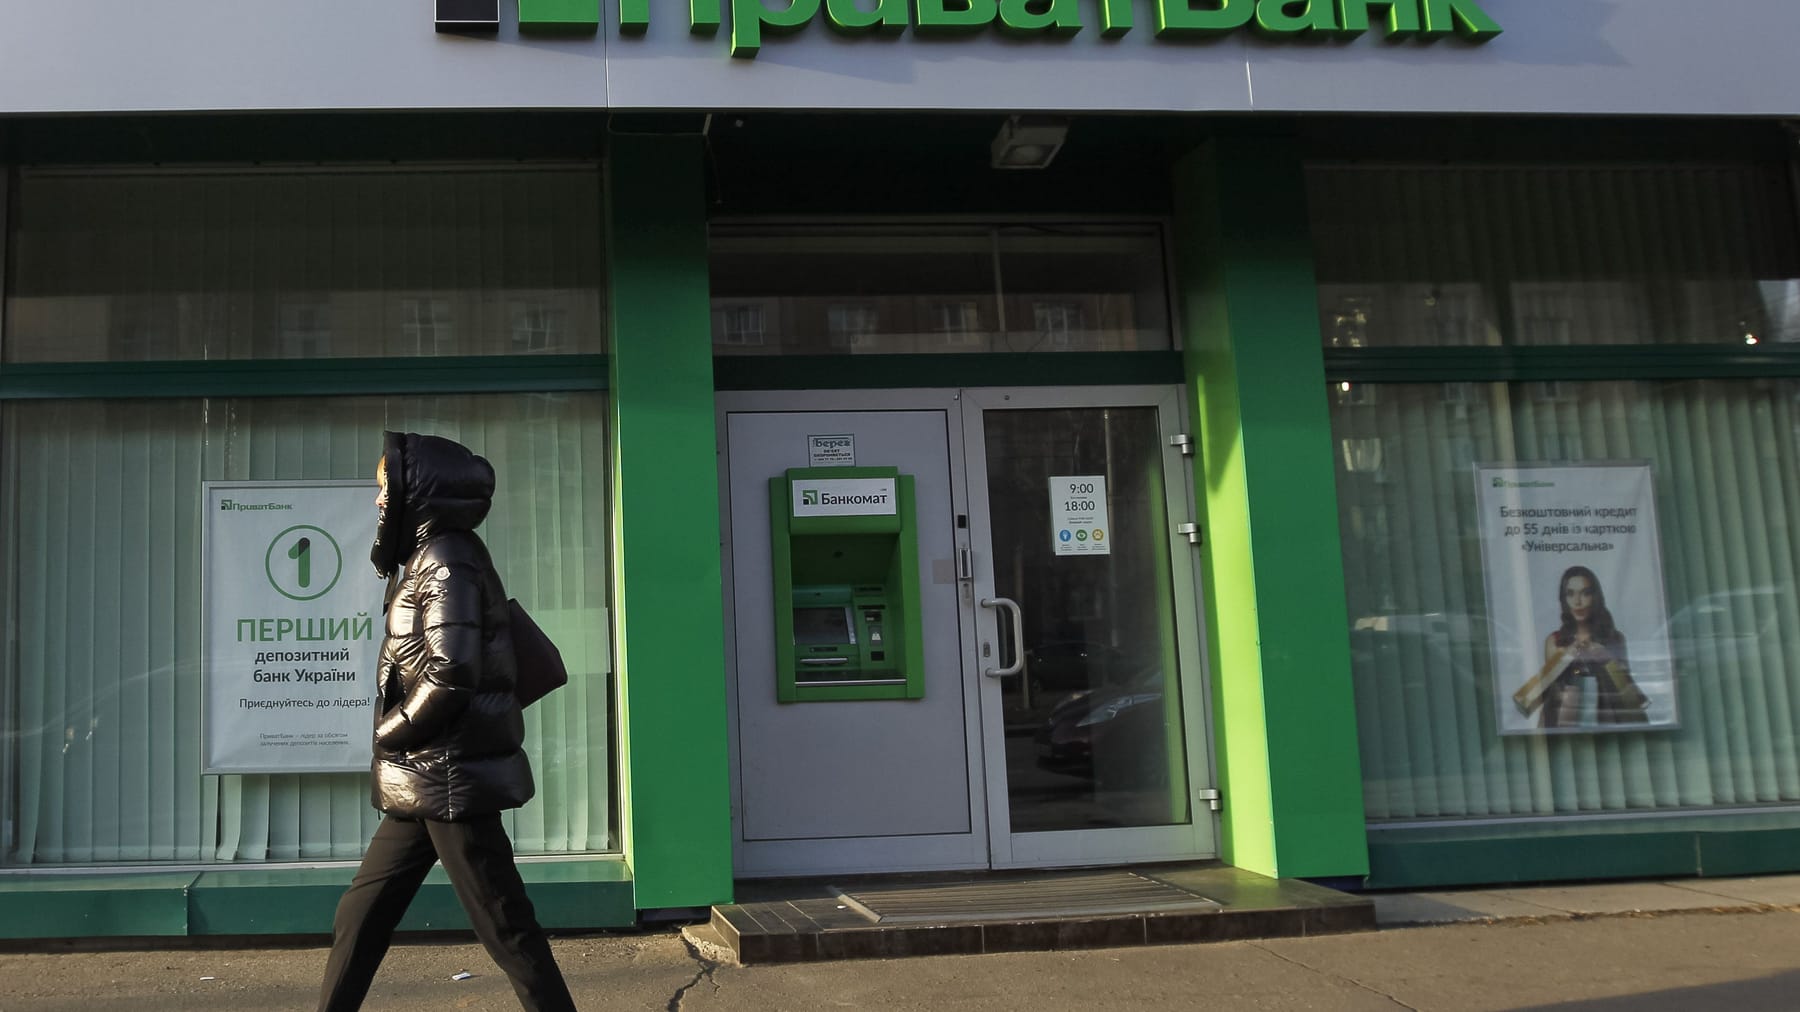 The Ukrainian Bank surprises Russian customers